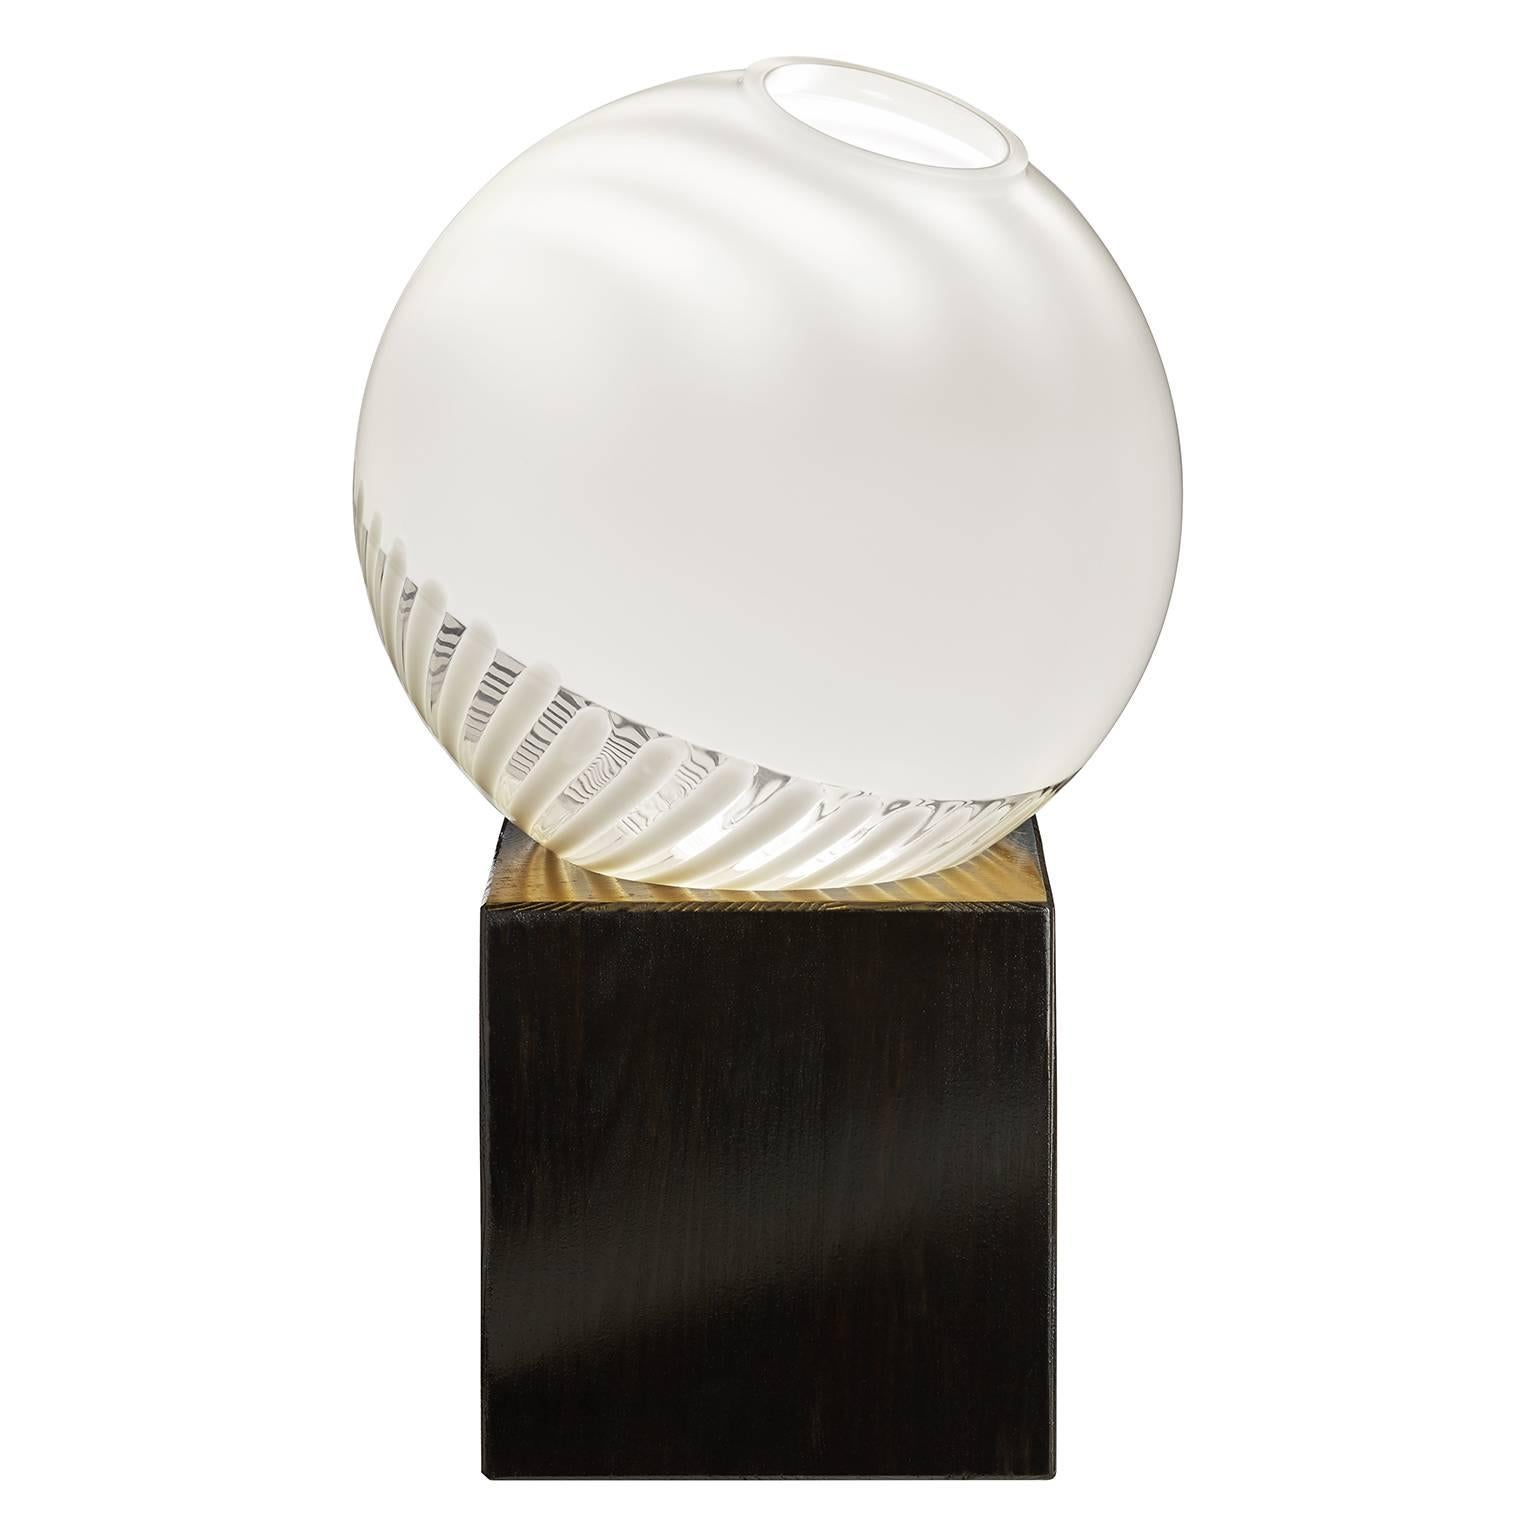 Satin Carlo Moretti Contemporary Murano Glass with Wood Base Table Lamp